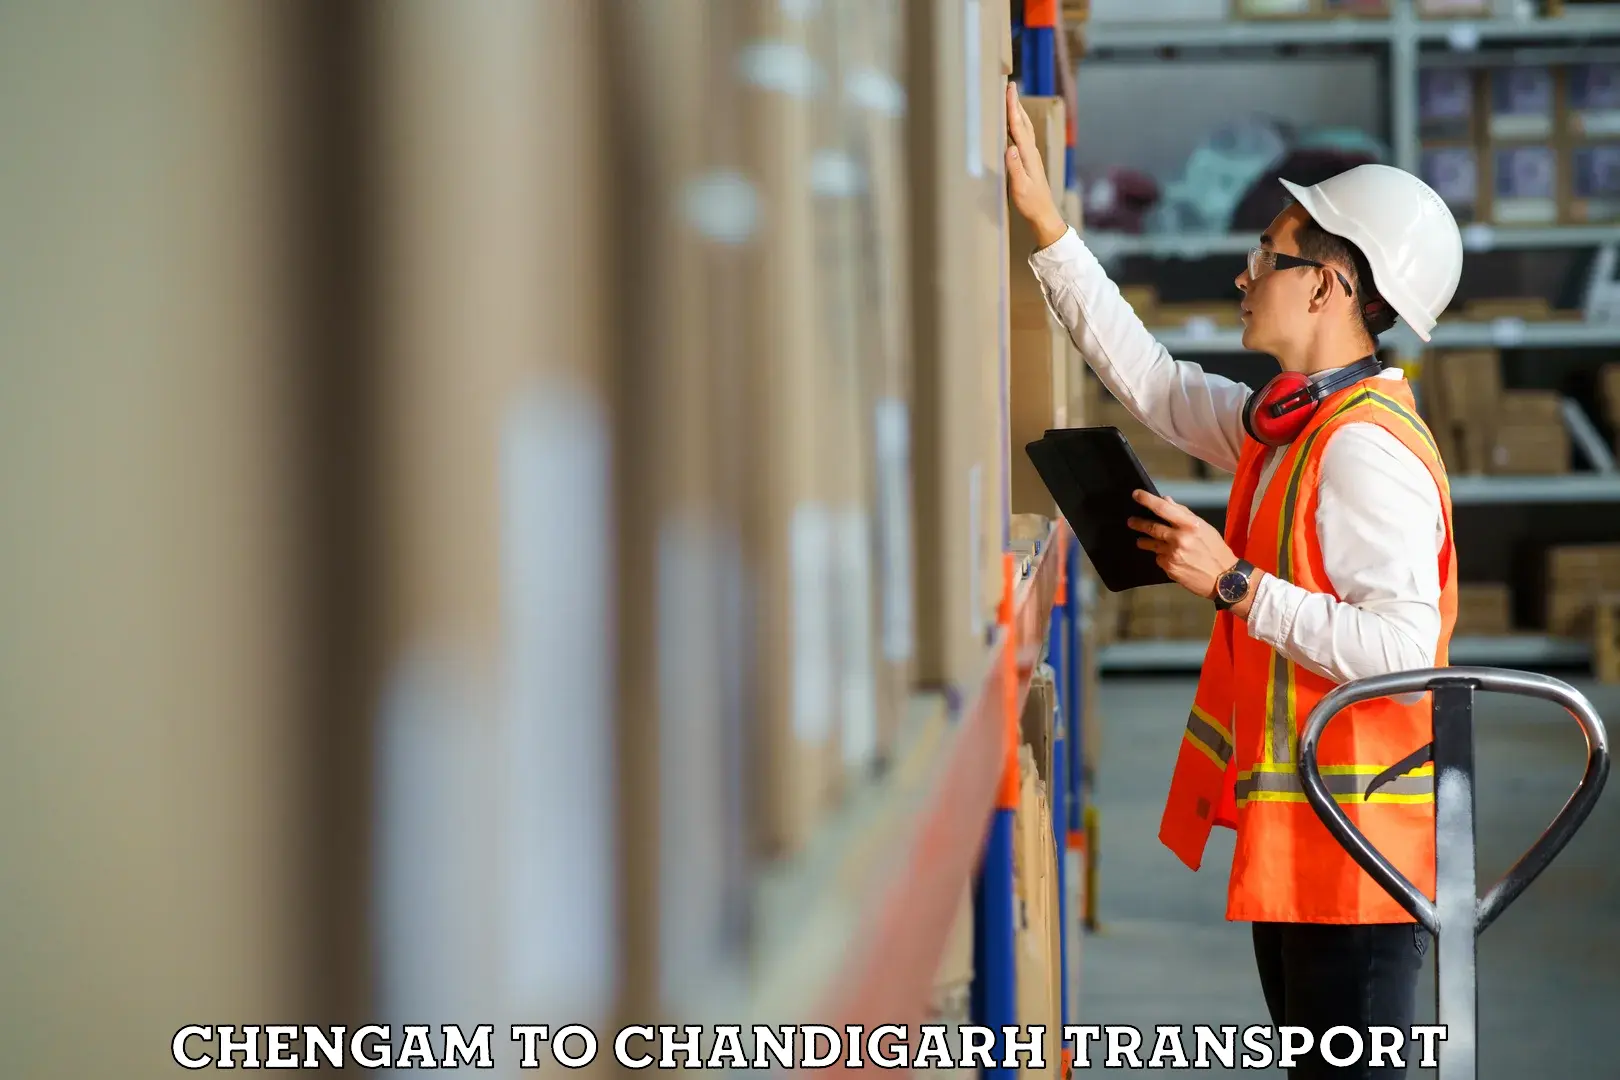 Furniture transport service Chengam to Chandigarh